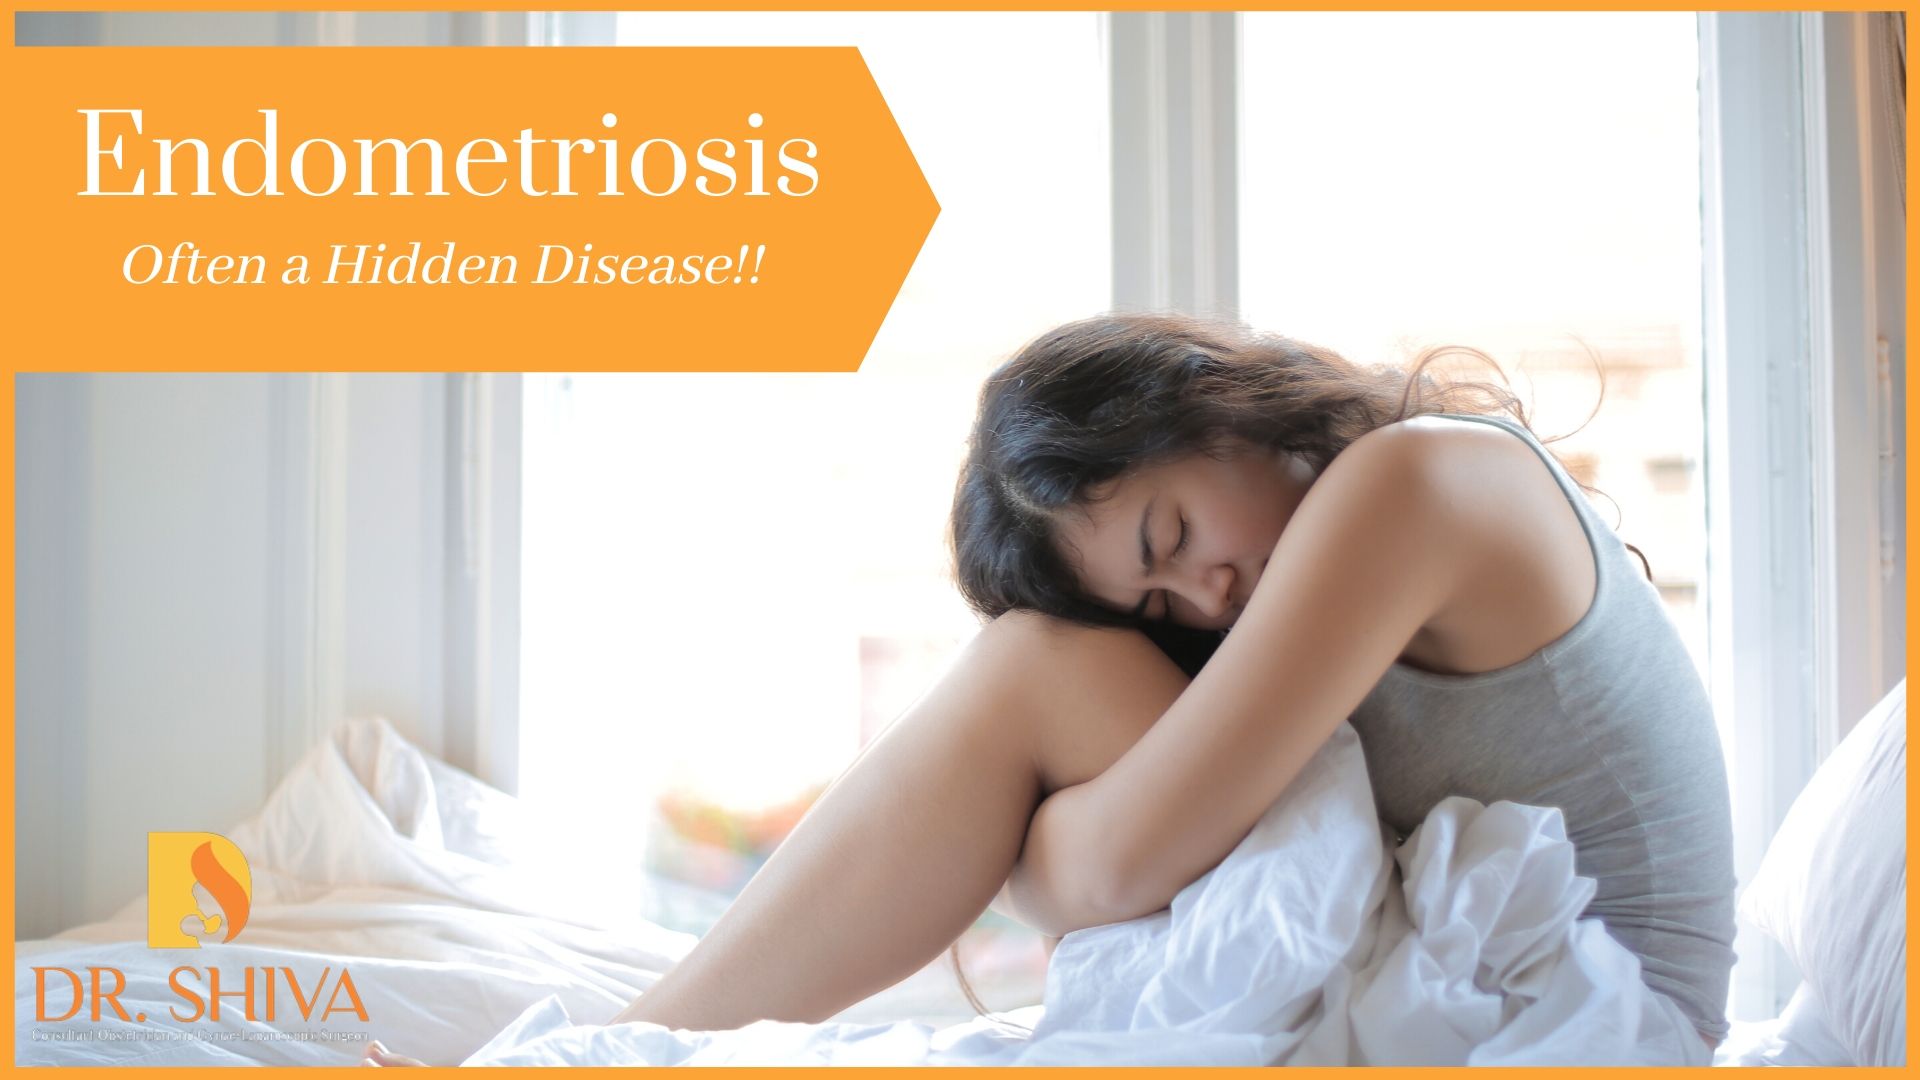 Endometriosis: Often a hidden disease